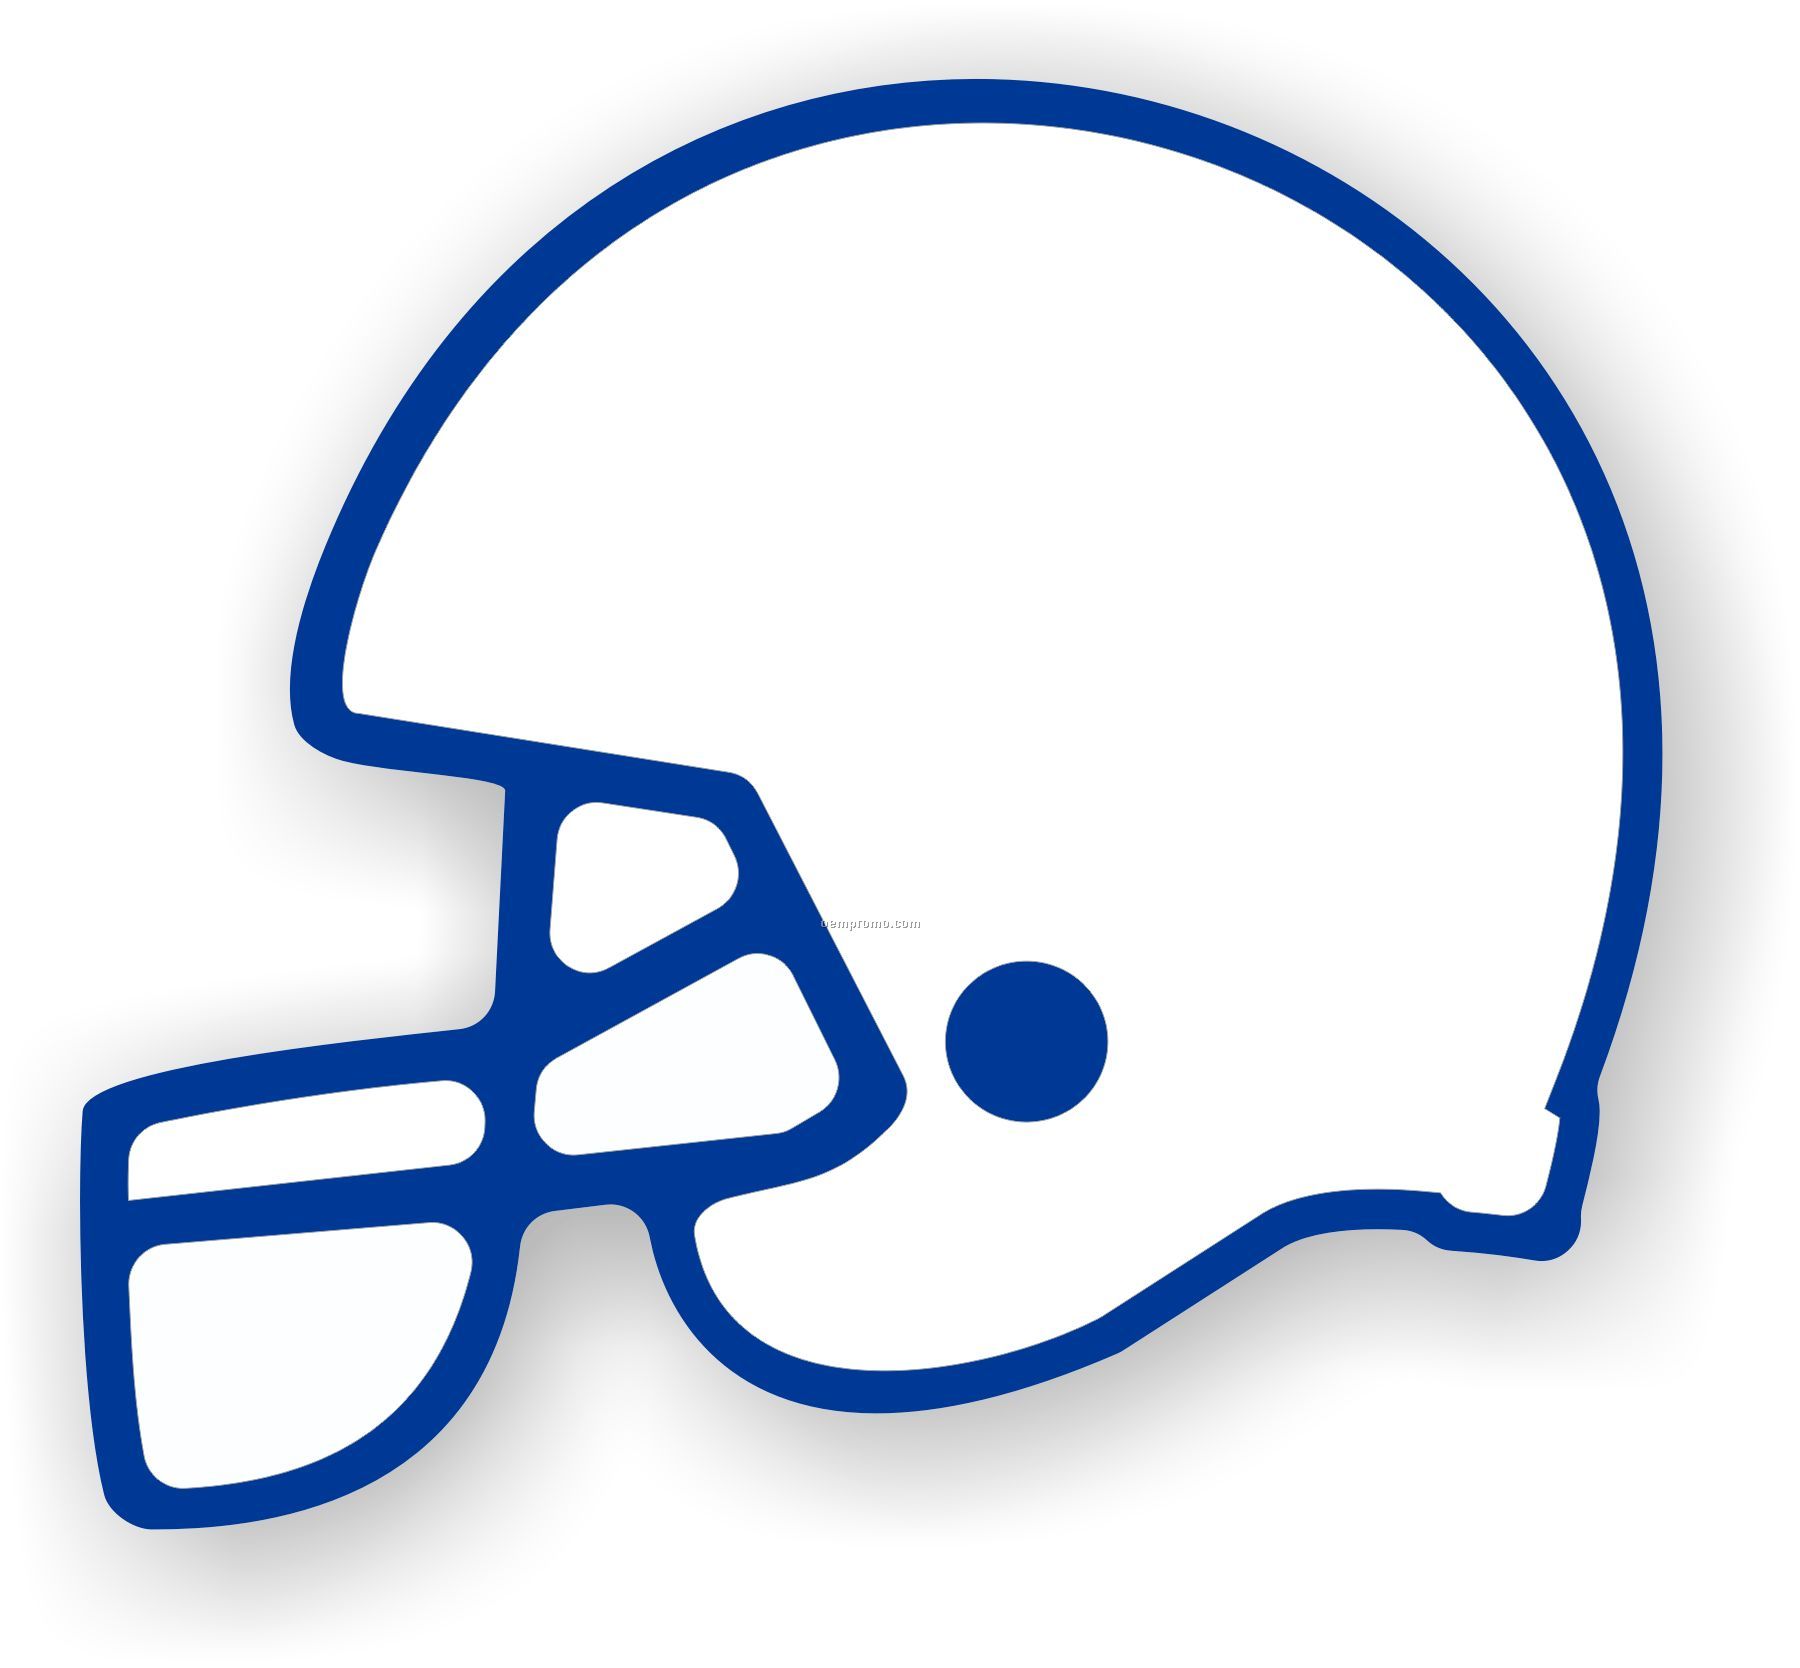 Football Helmet Pencil Drawing | Clipart Panda - Free Clipart Images